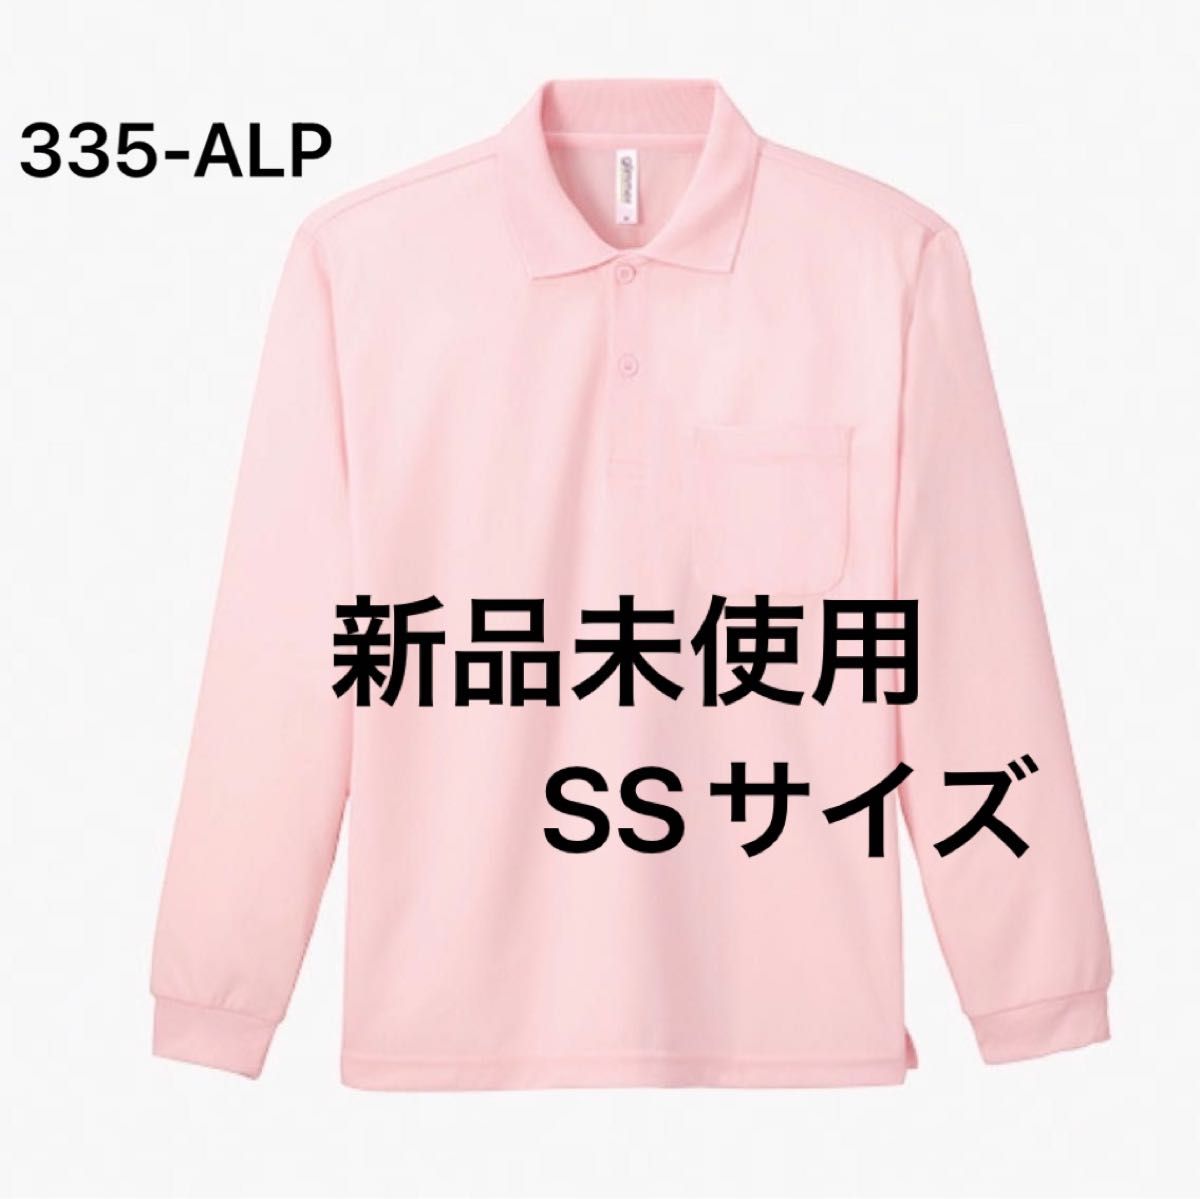 UVカット ドライ ポロシャツ 長袖 【335-ALP】ライトピンク SSサイズ【36】